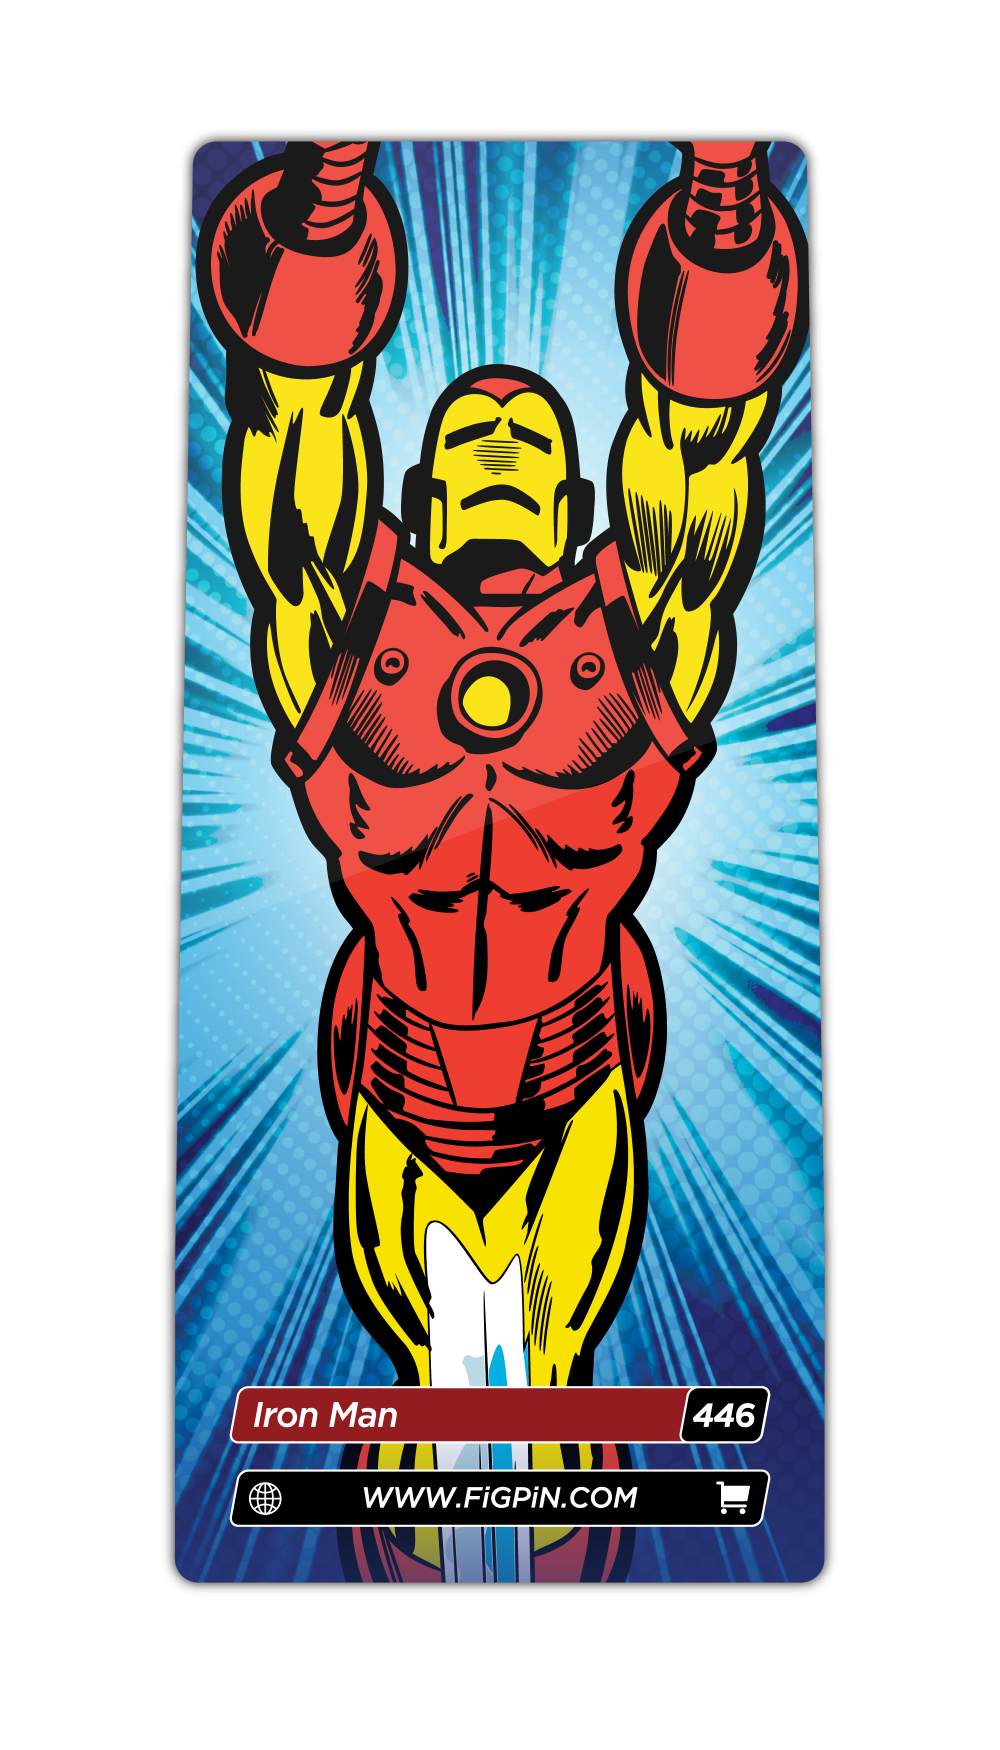 Iron Man (446)